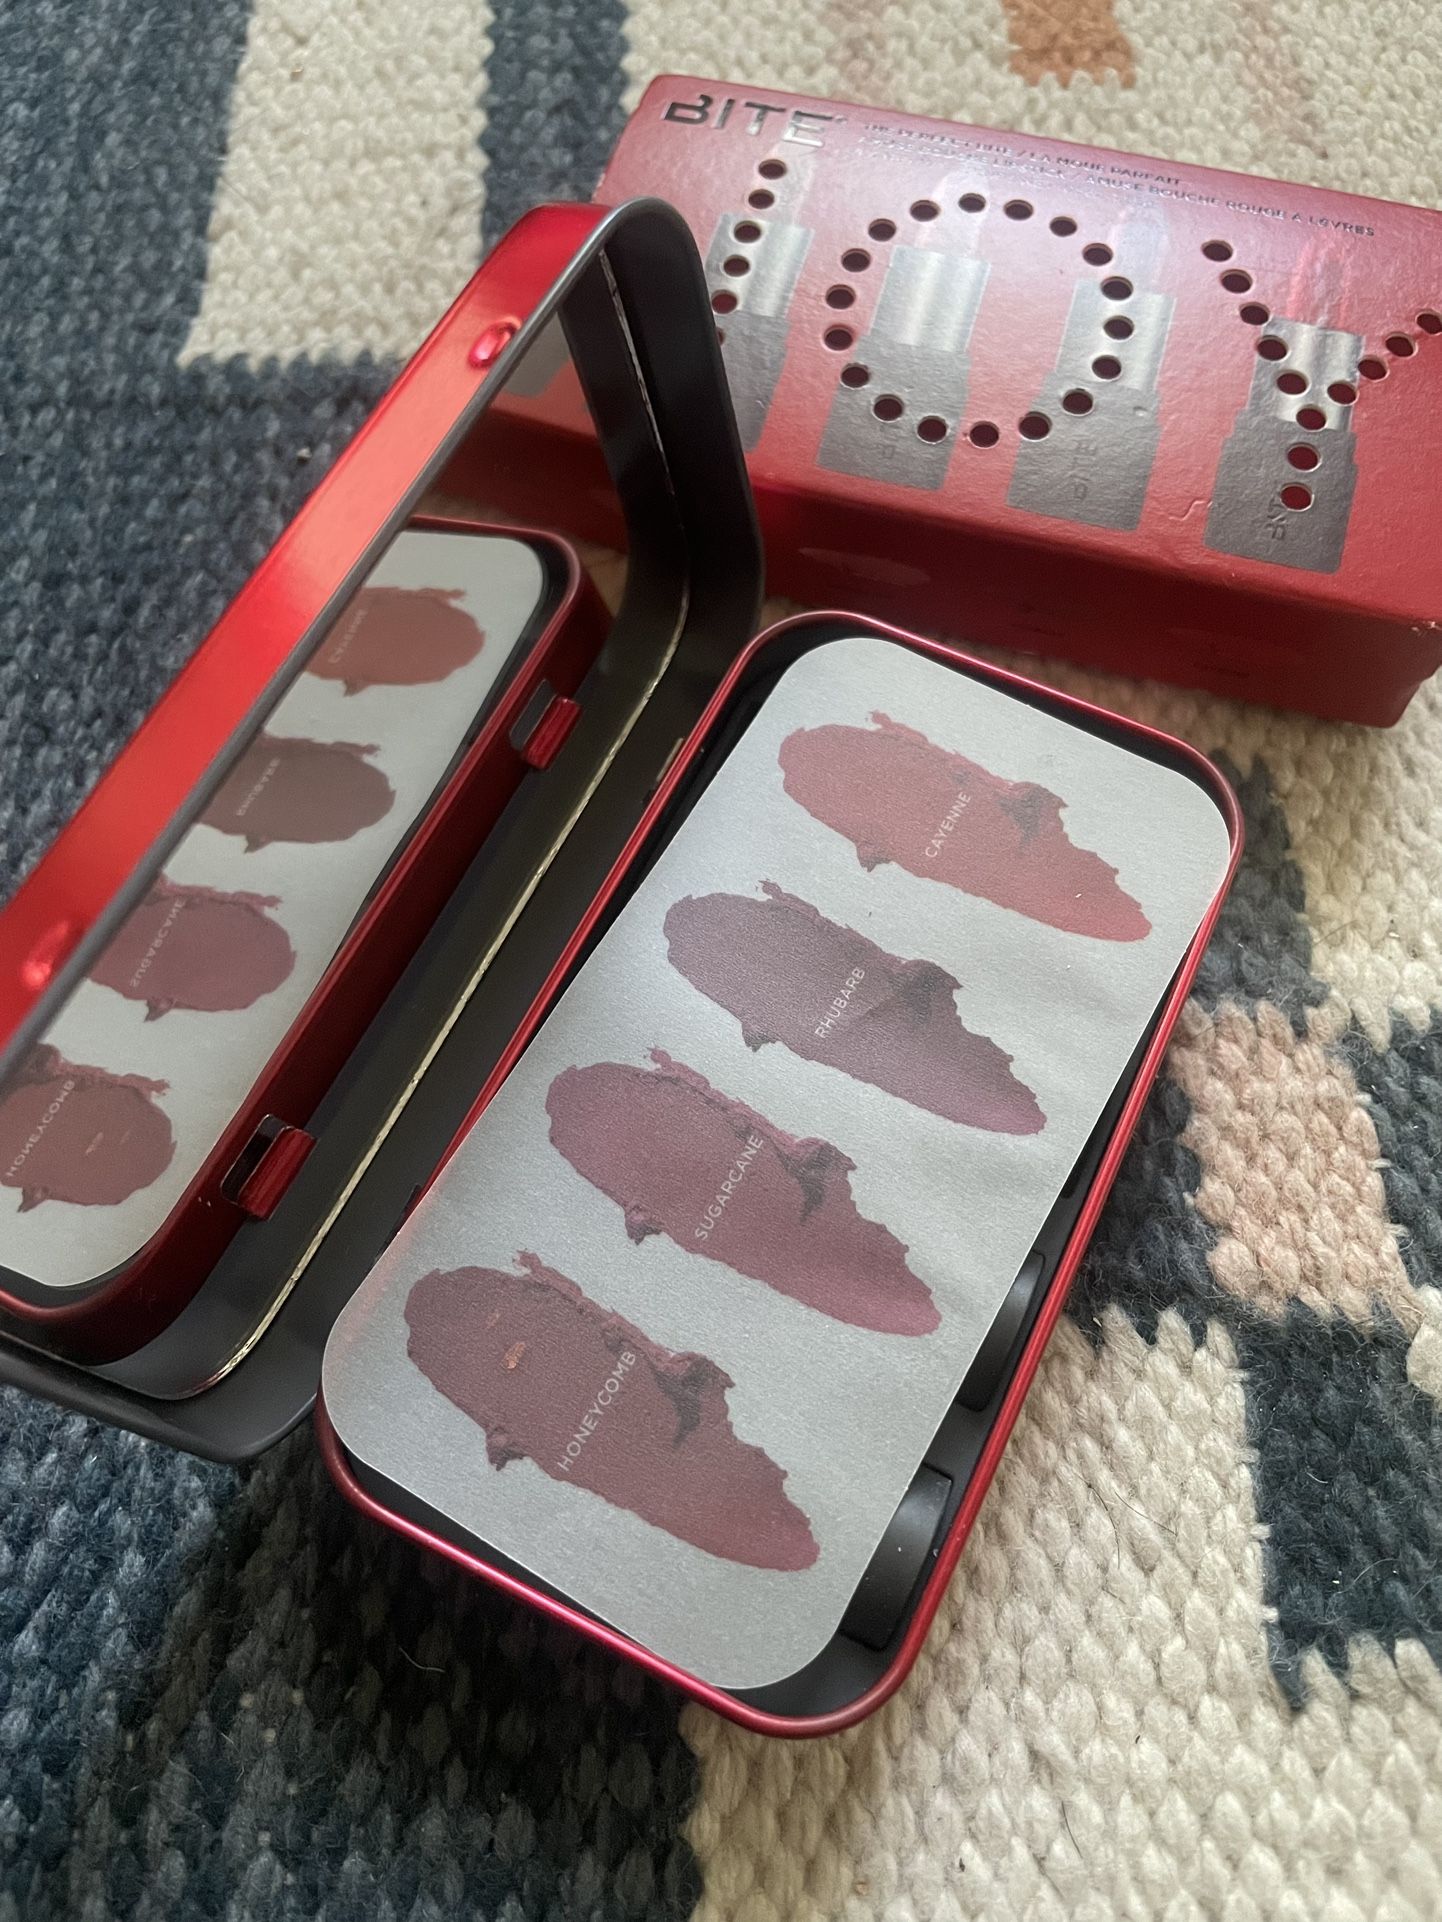 Bite Beauty ‘The Perfect Bite’ Amuse Bouche Lipstick Set Of 4 With Mirrored Case